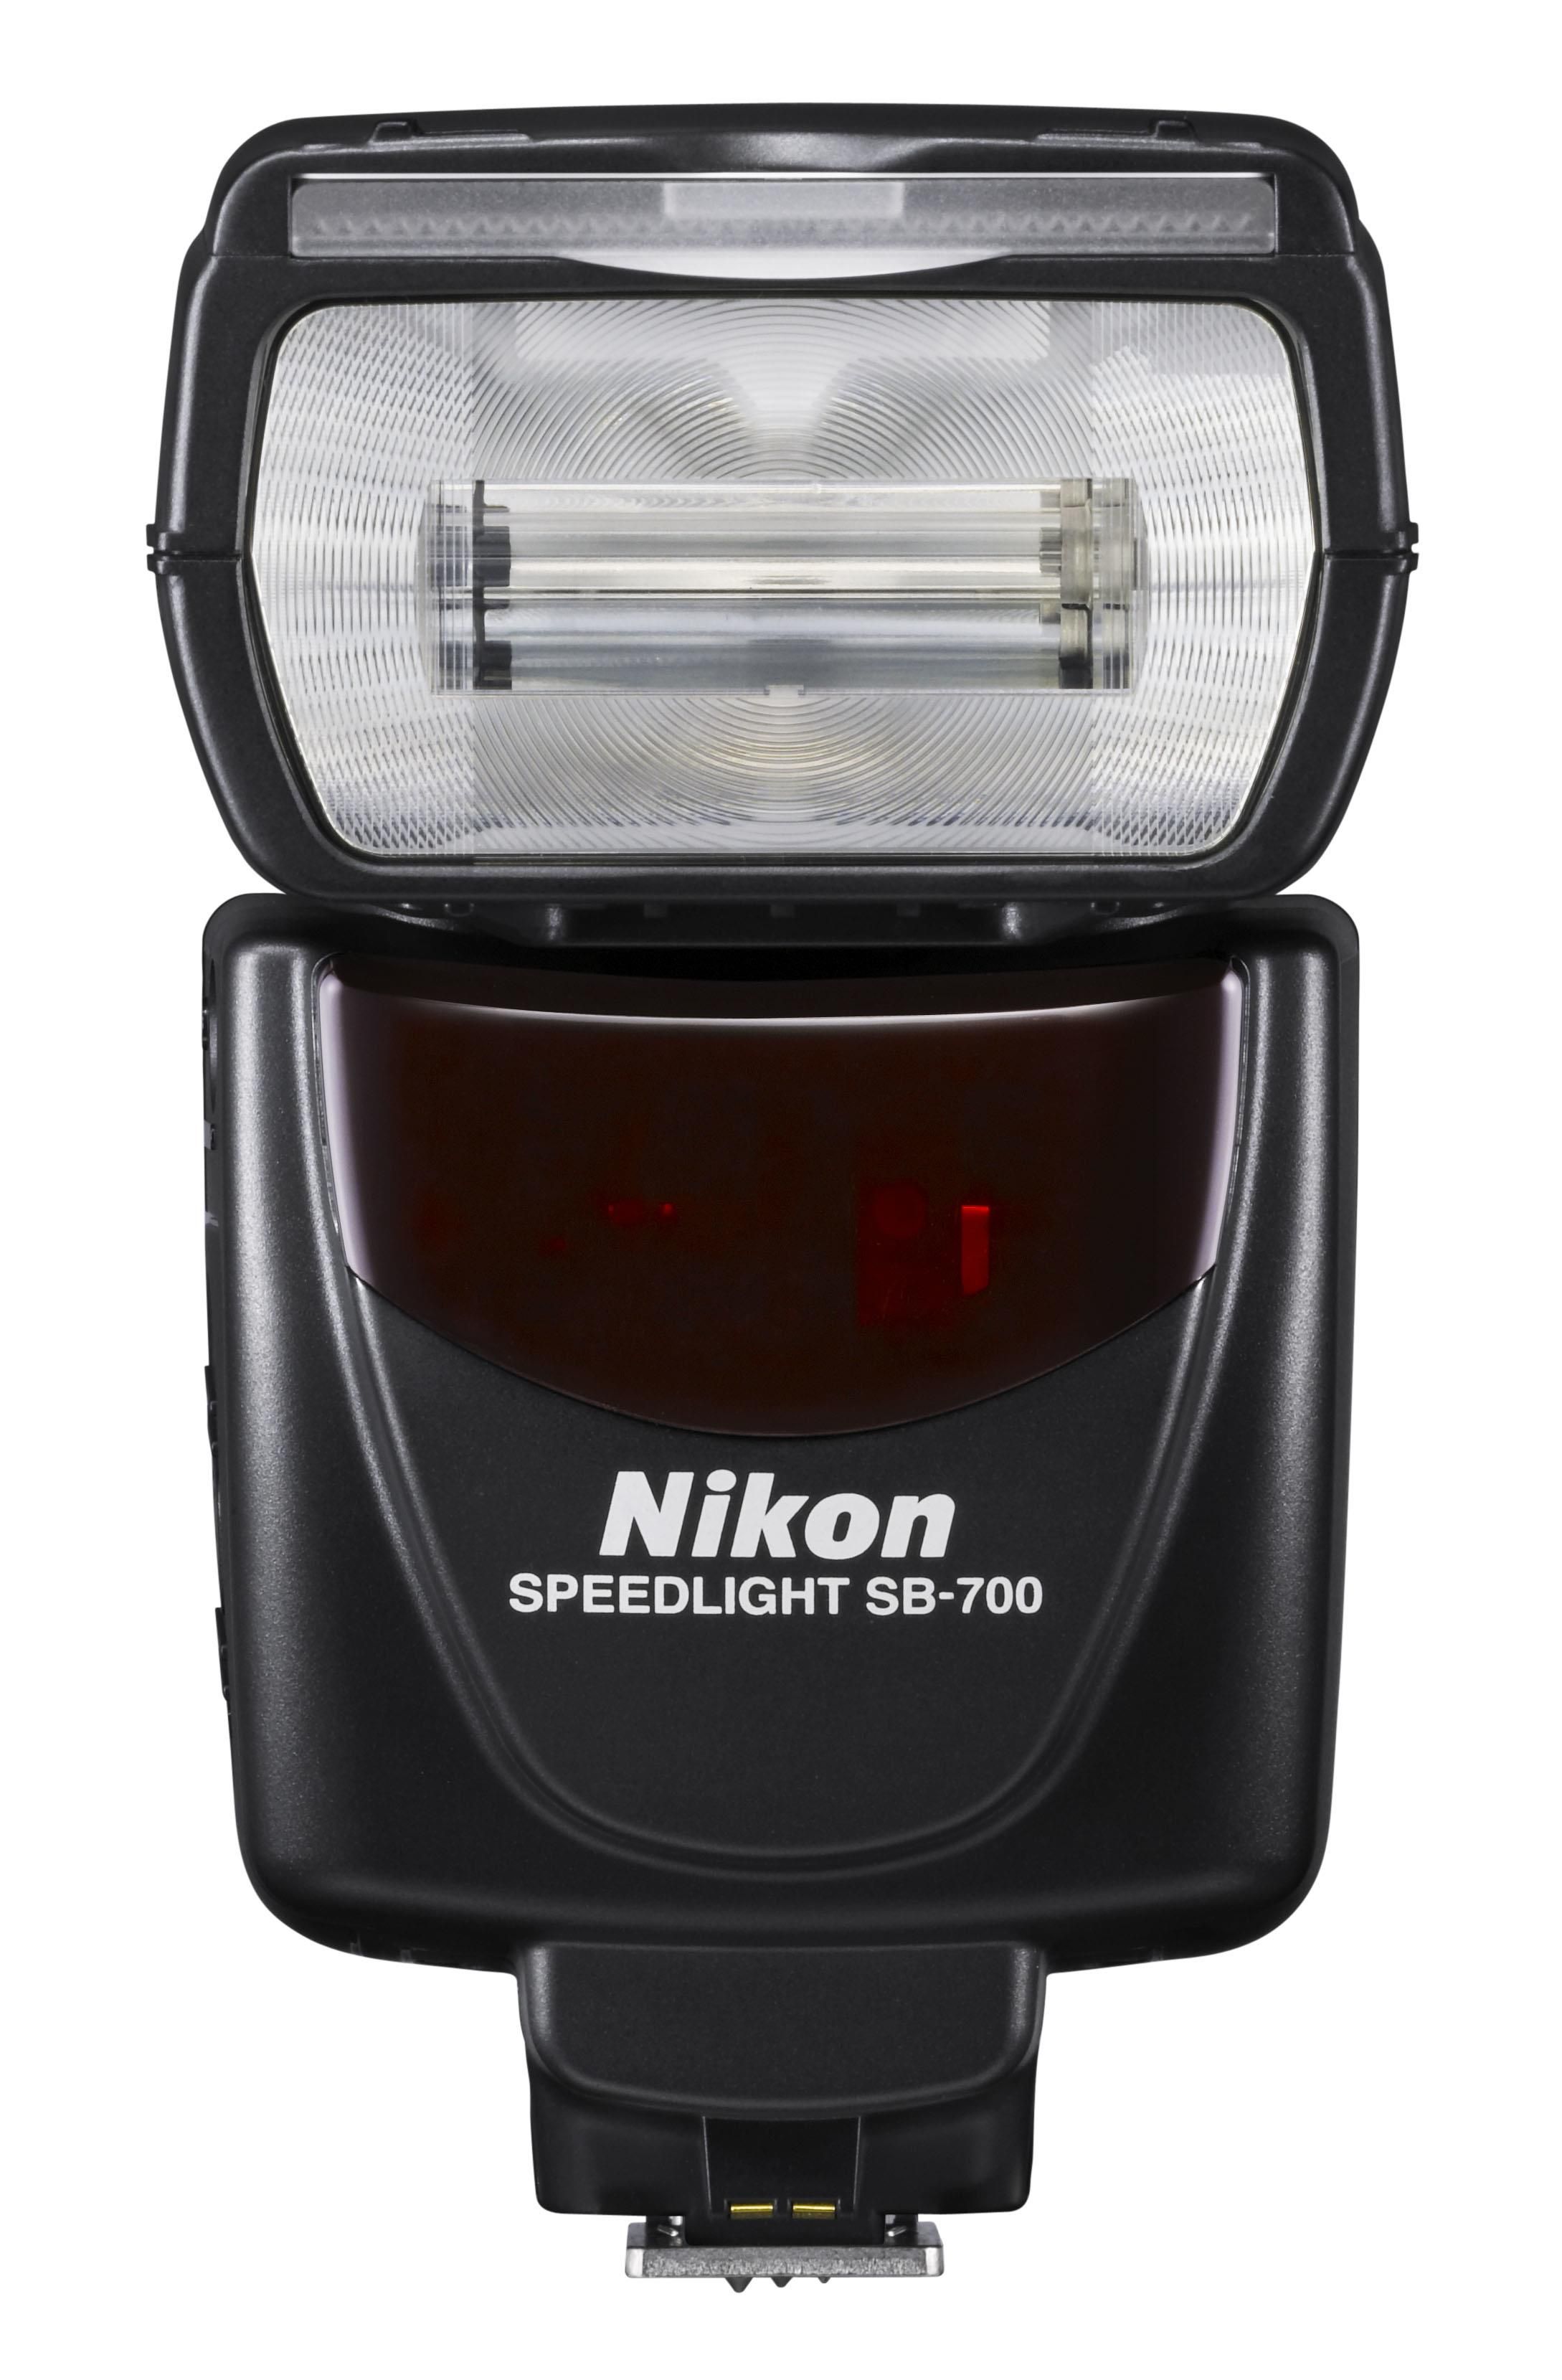 Nikon Lampeggiatore Sb-700